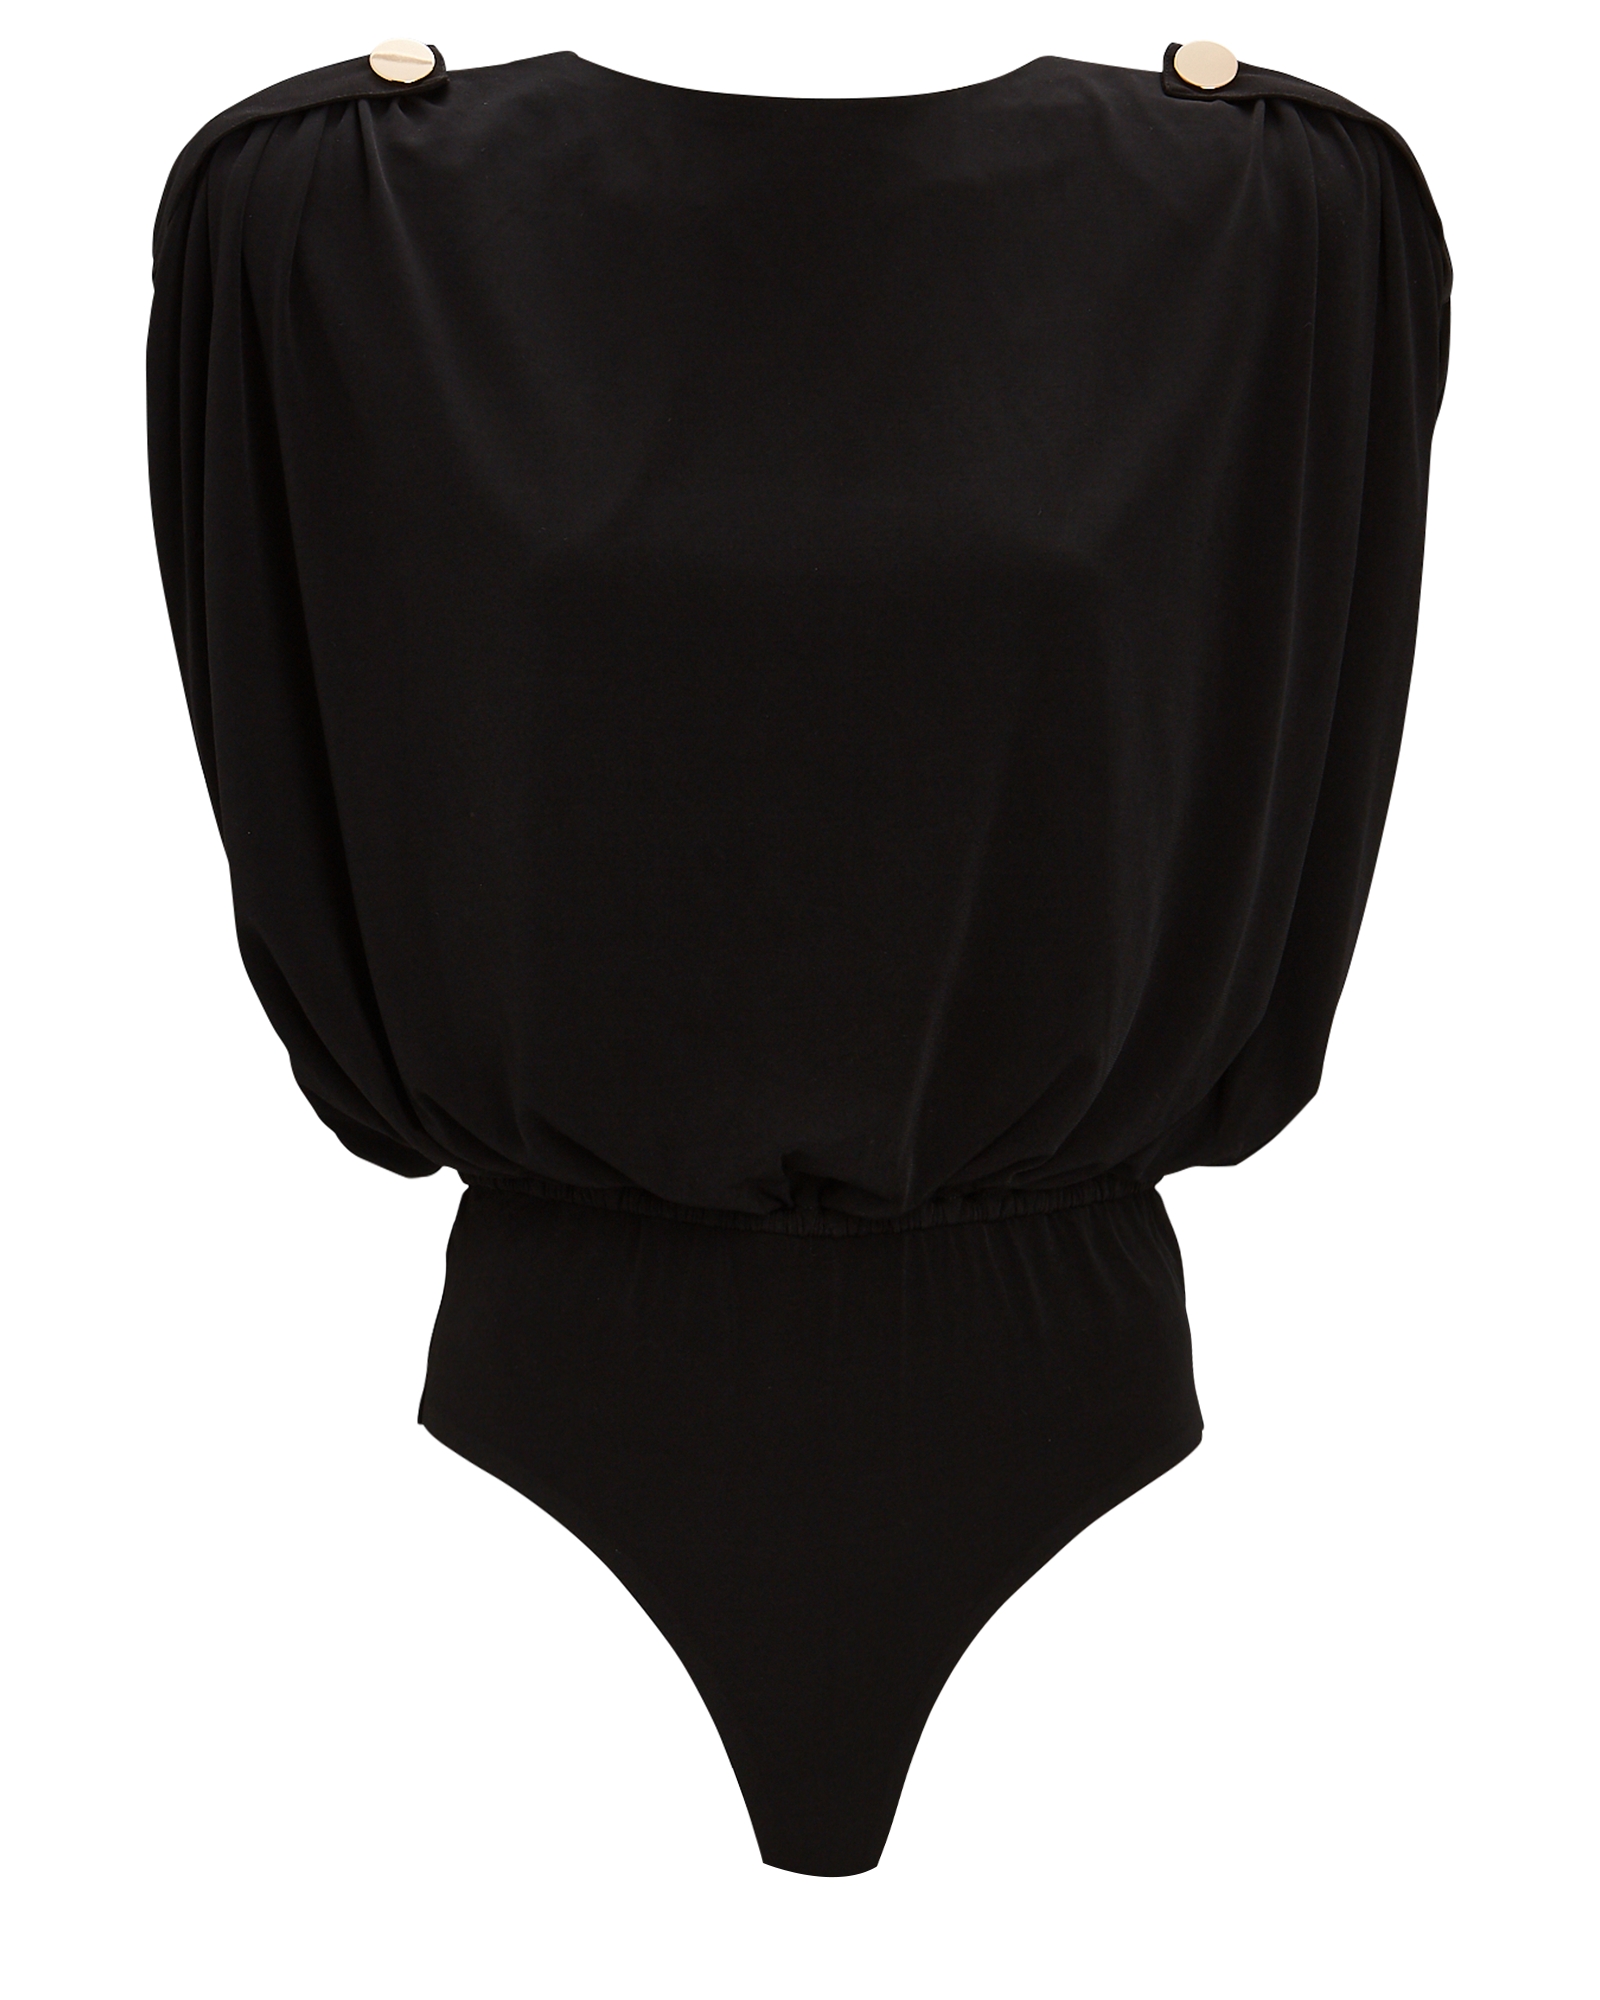 Retrofête Eleanor Chain-Embellished Bodysuit | INTERMIX®